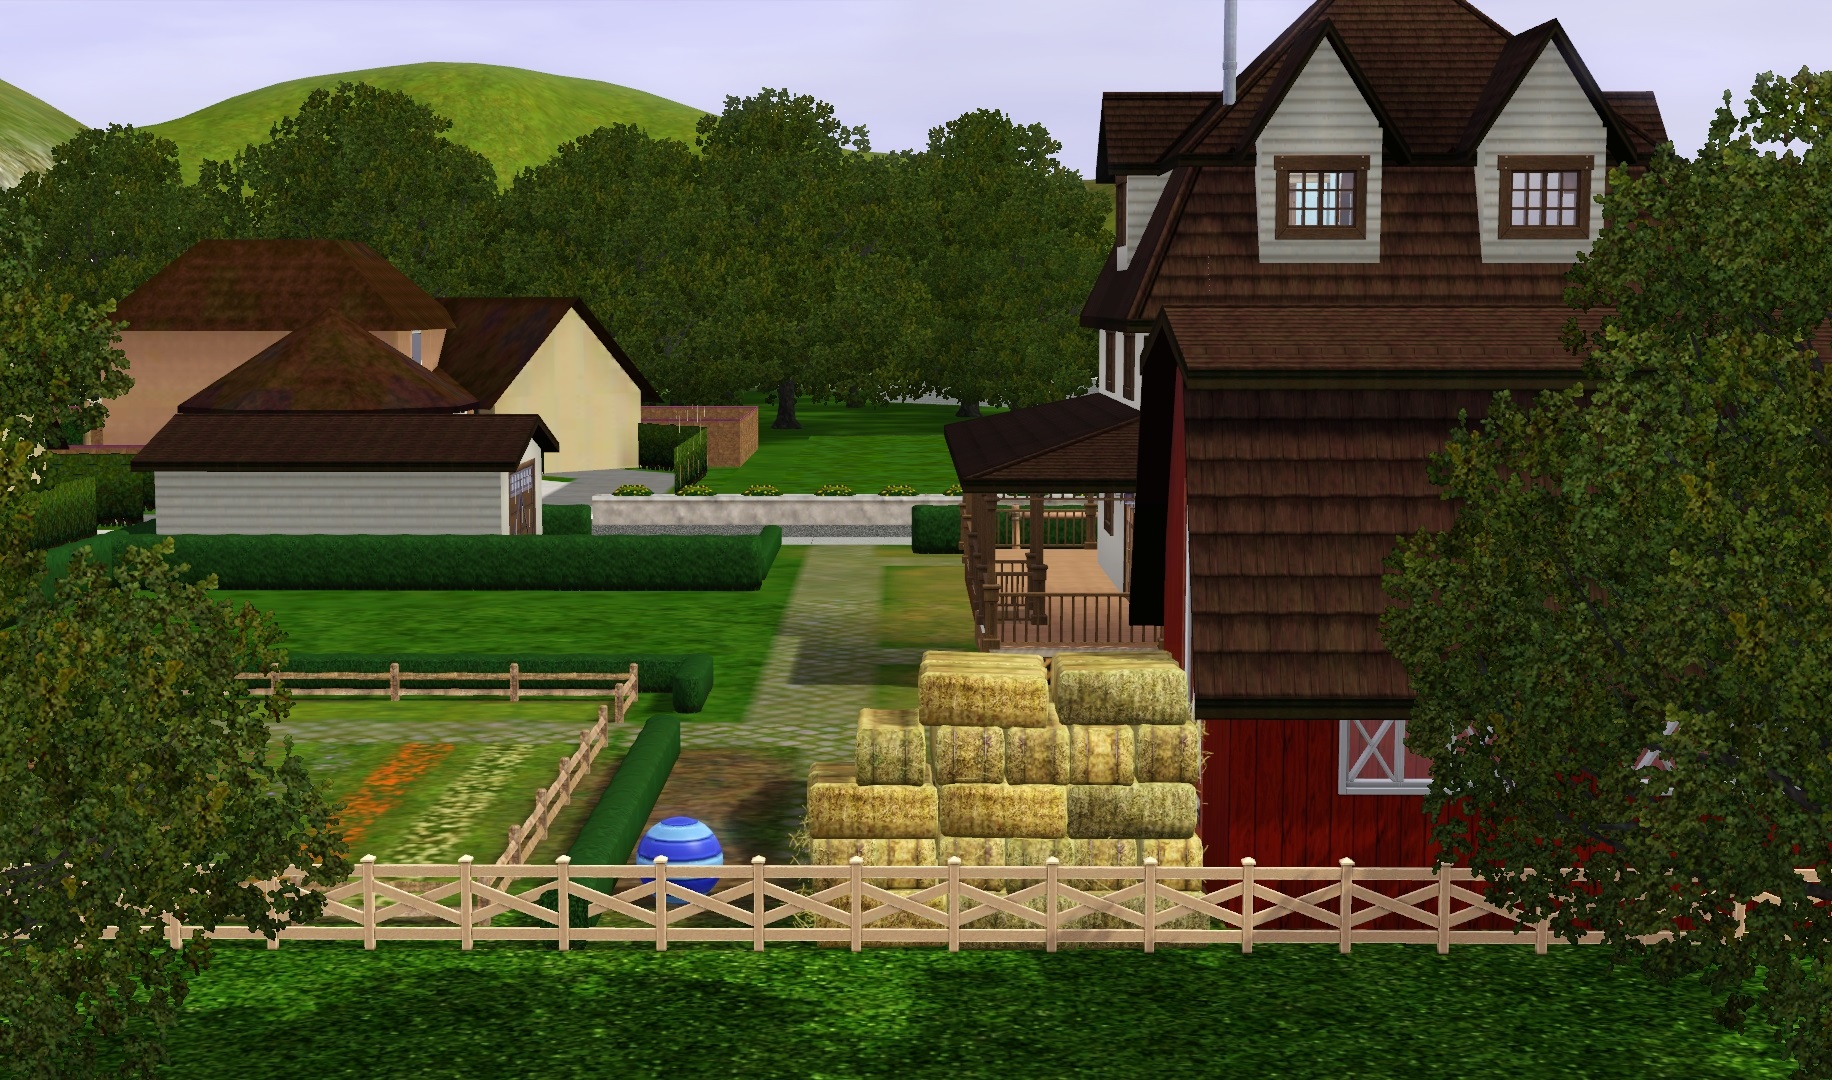 sims 4 farmhouse download